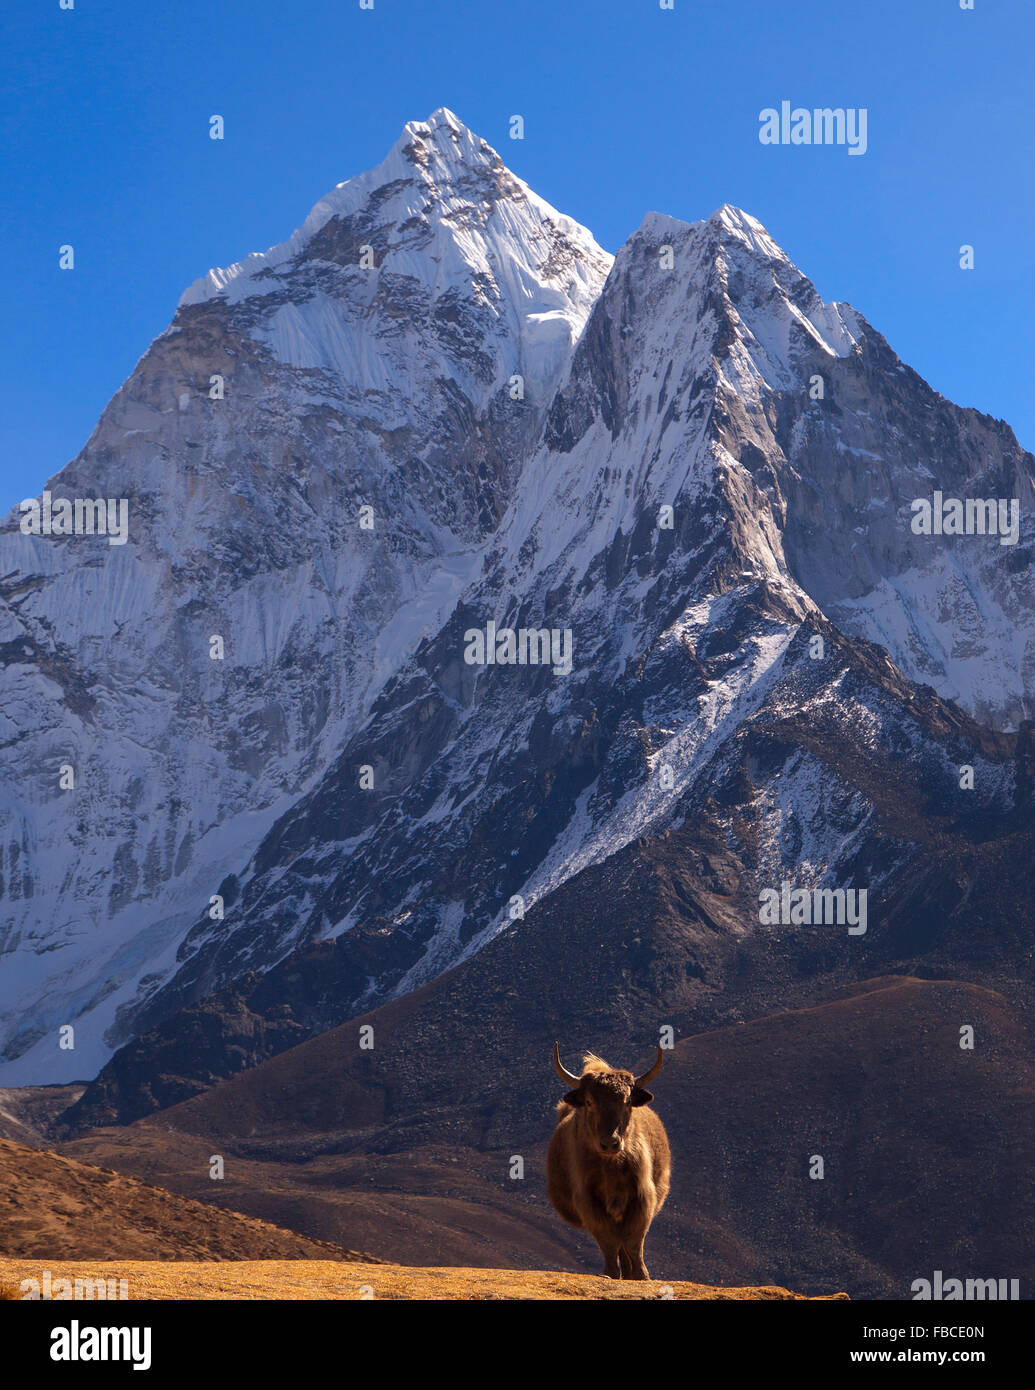 Yak with mountain backdrop Stock Photo